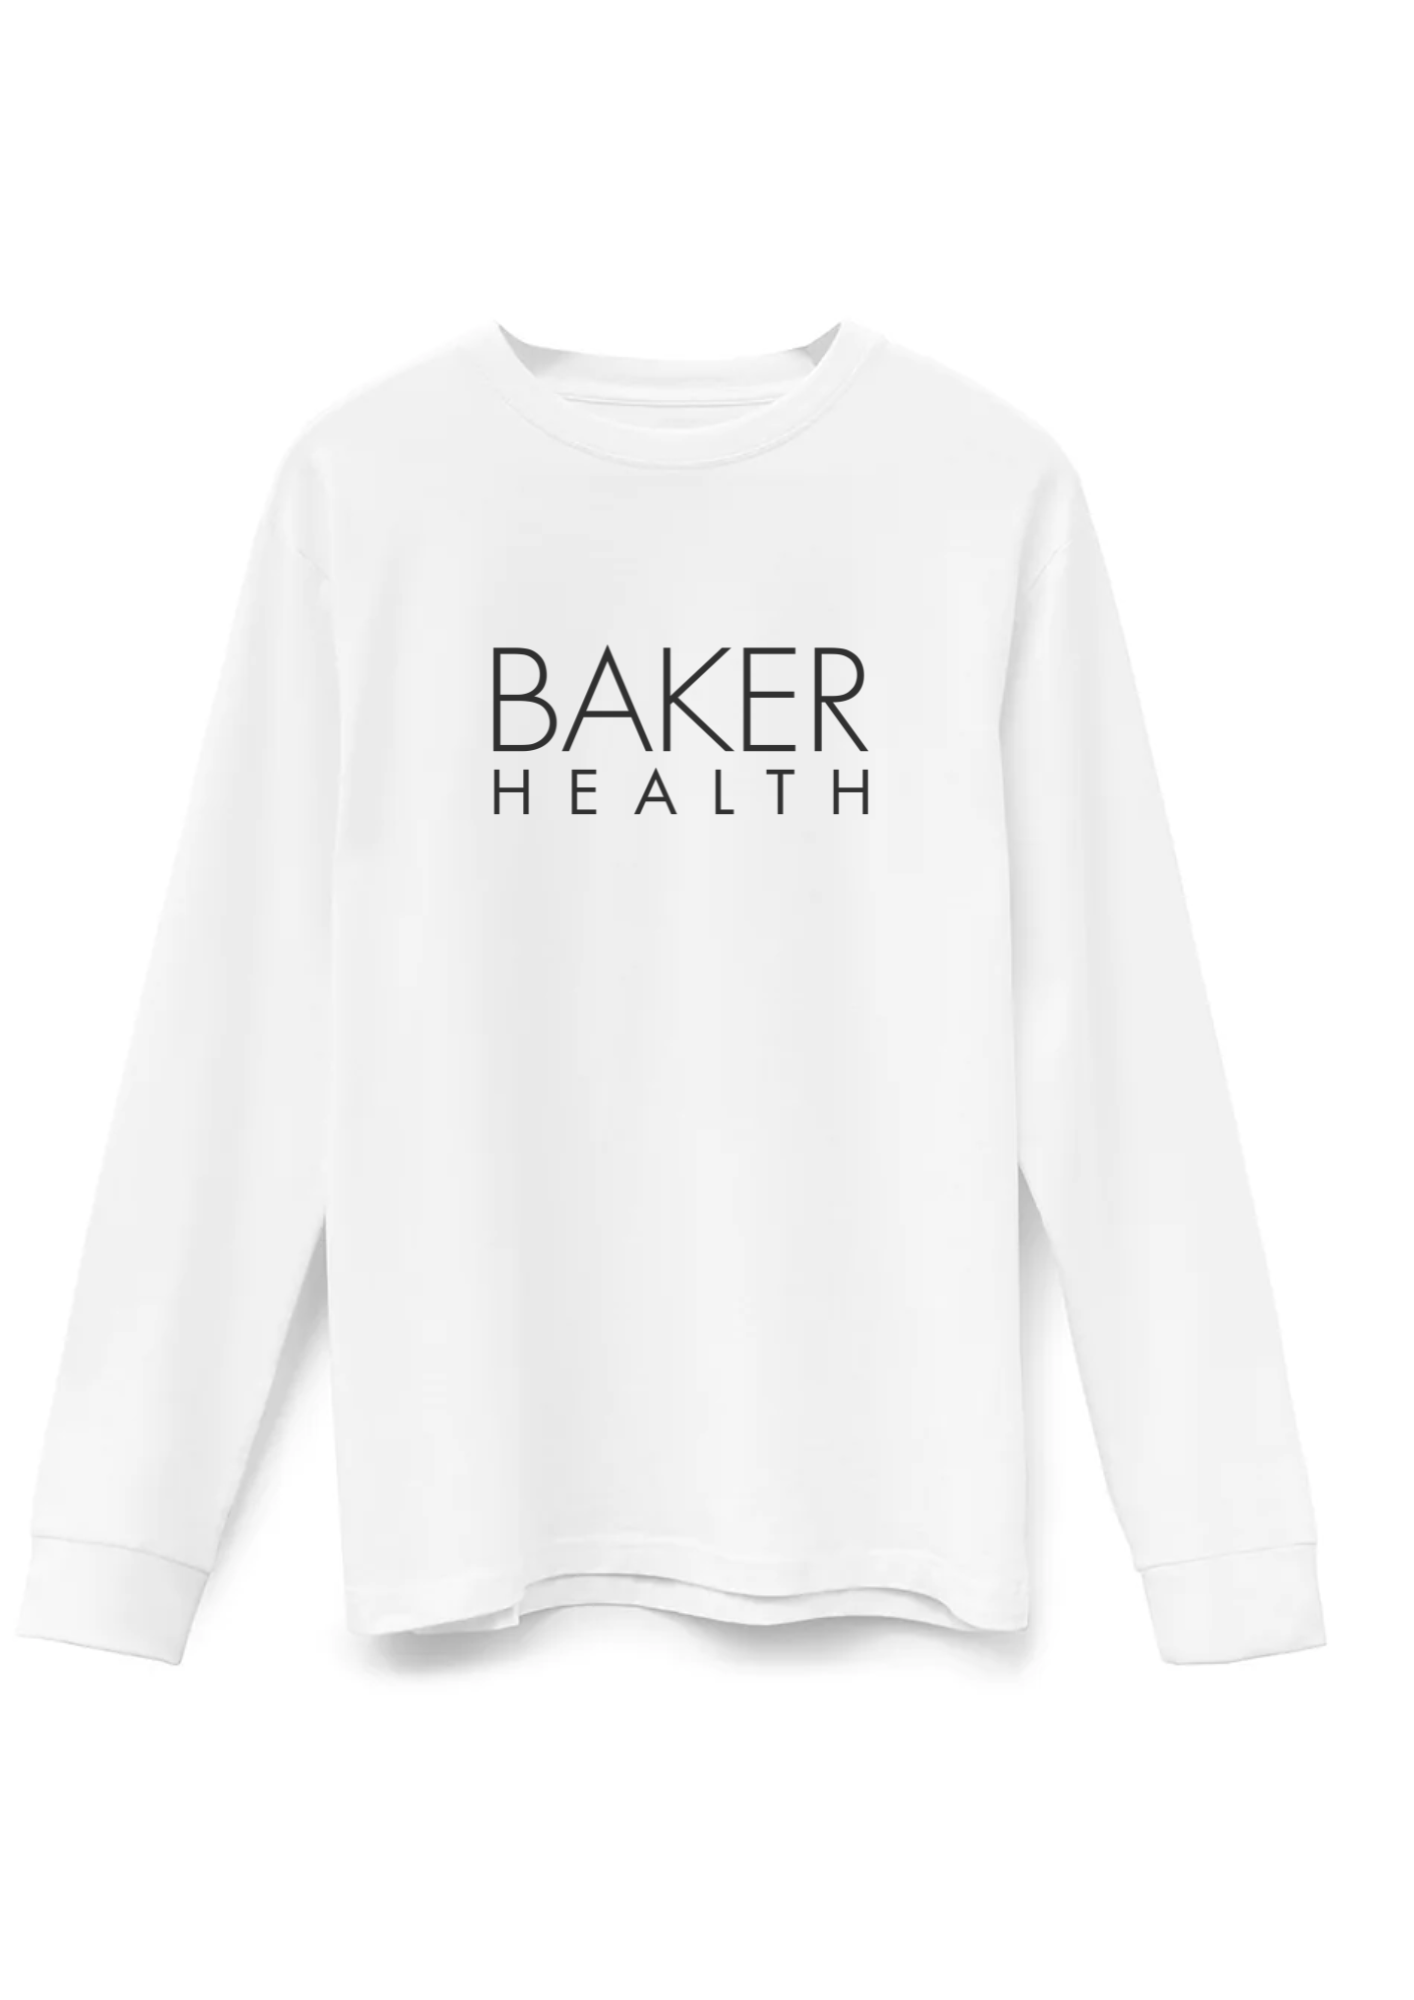 Baker Health - Unisex Long Sleeve T-Shirt